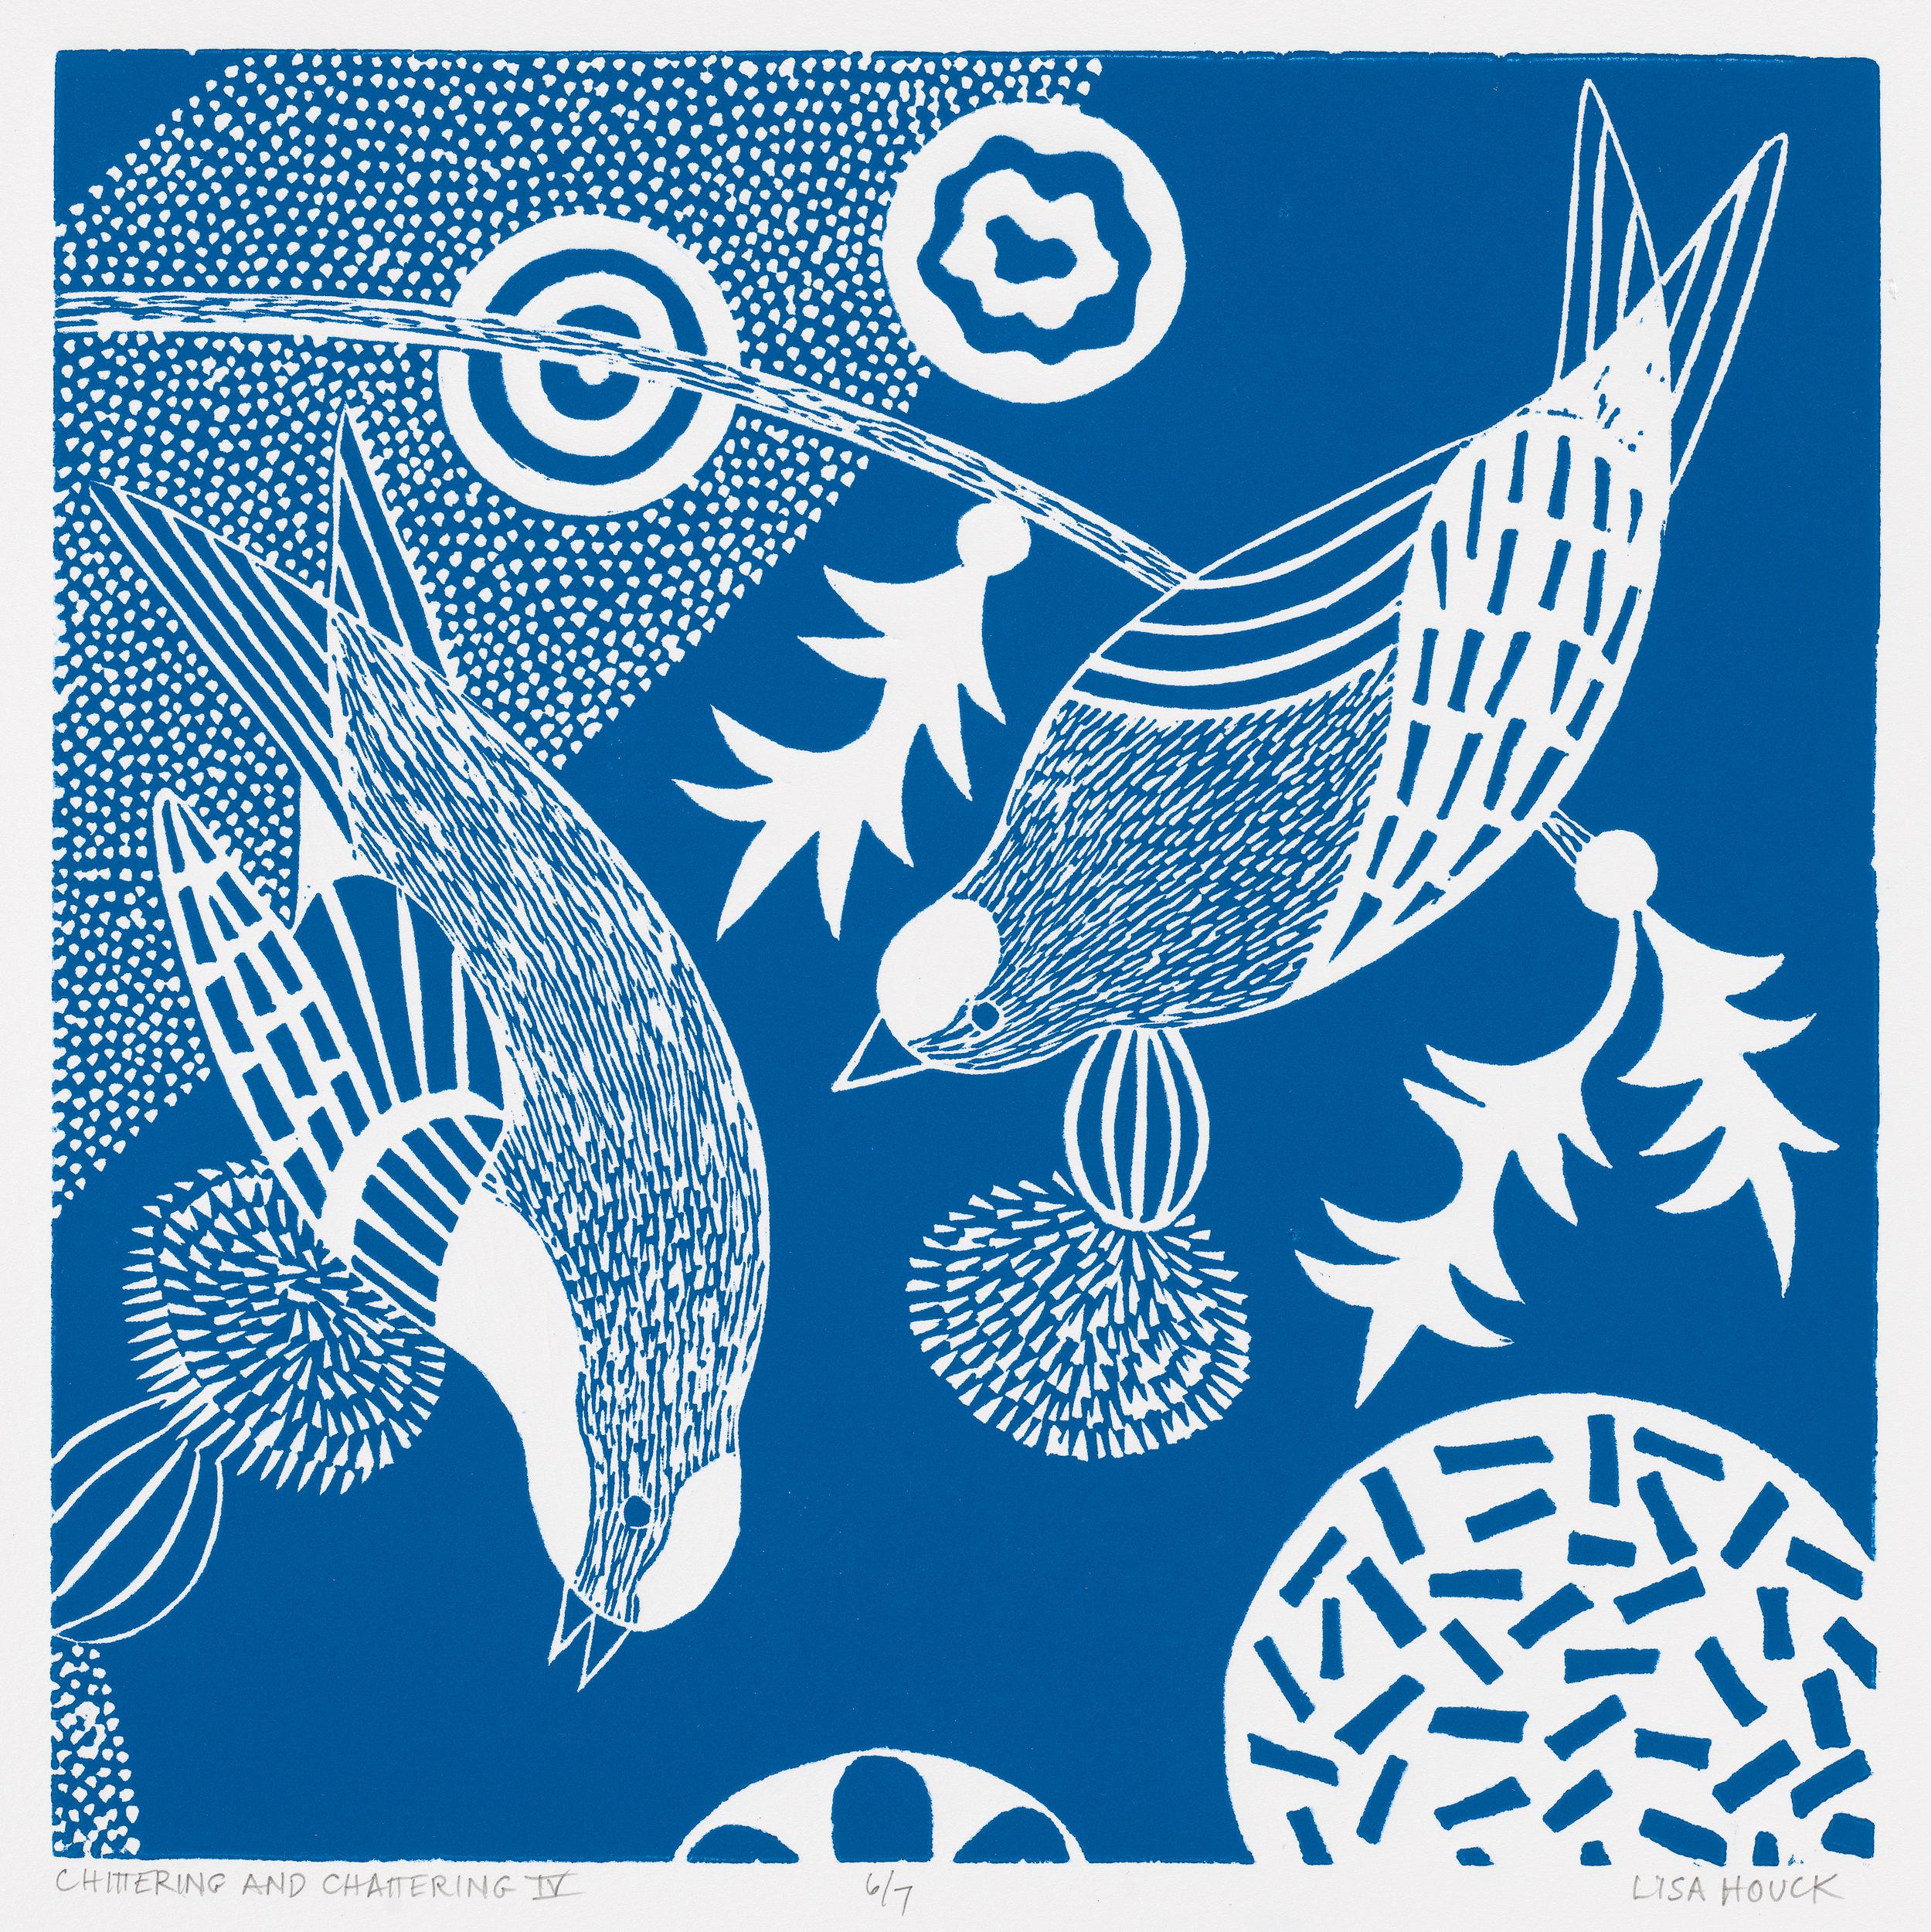 Lisa Houck Animal Print - "Chittering & Chattering IV" Folk inspired linocut bird series in blue and white